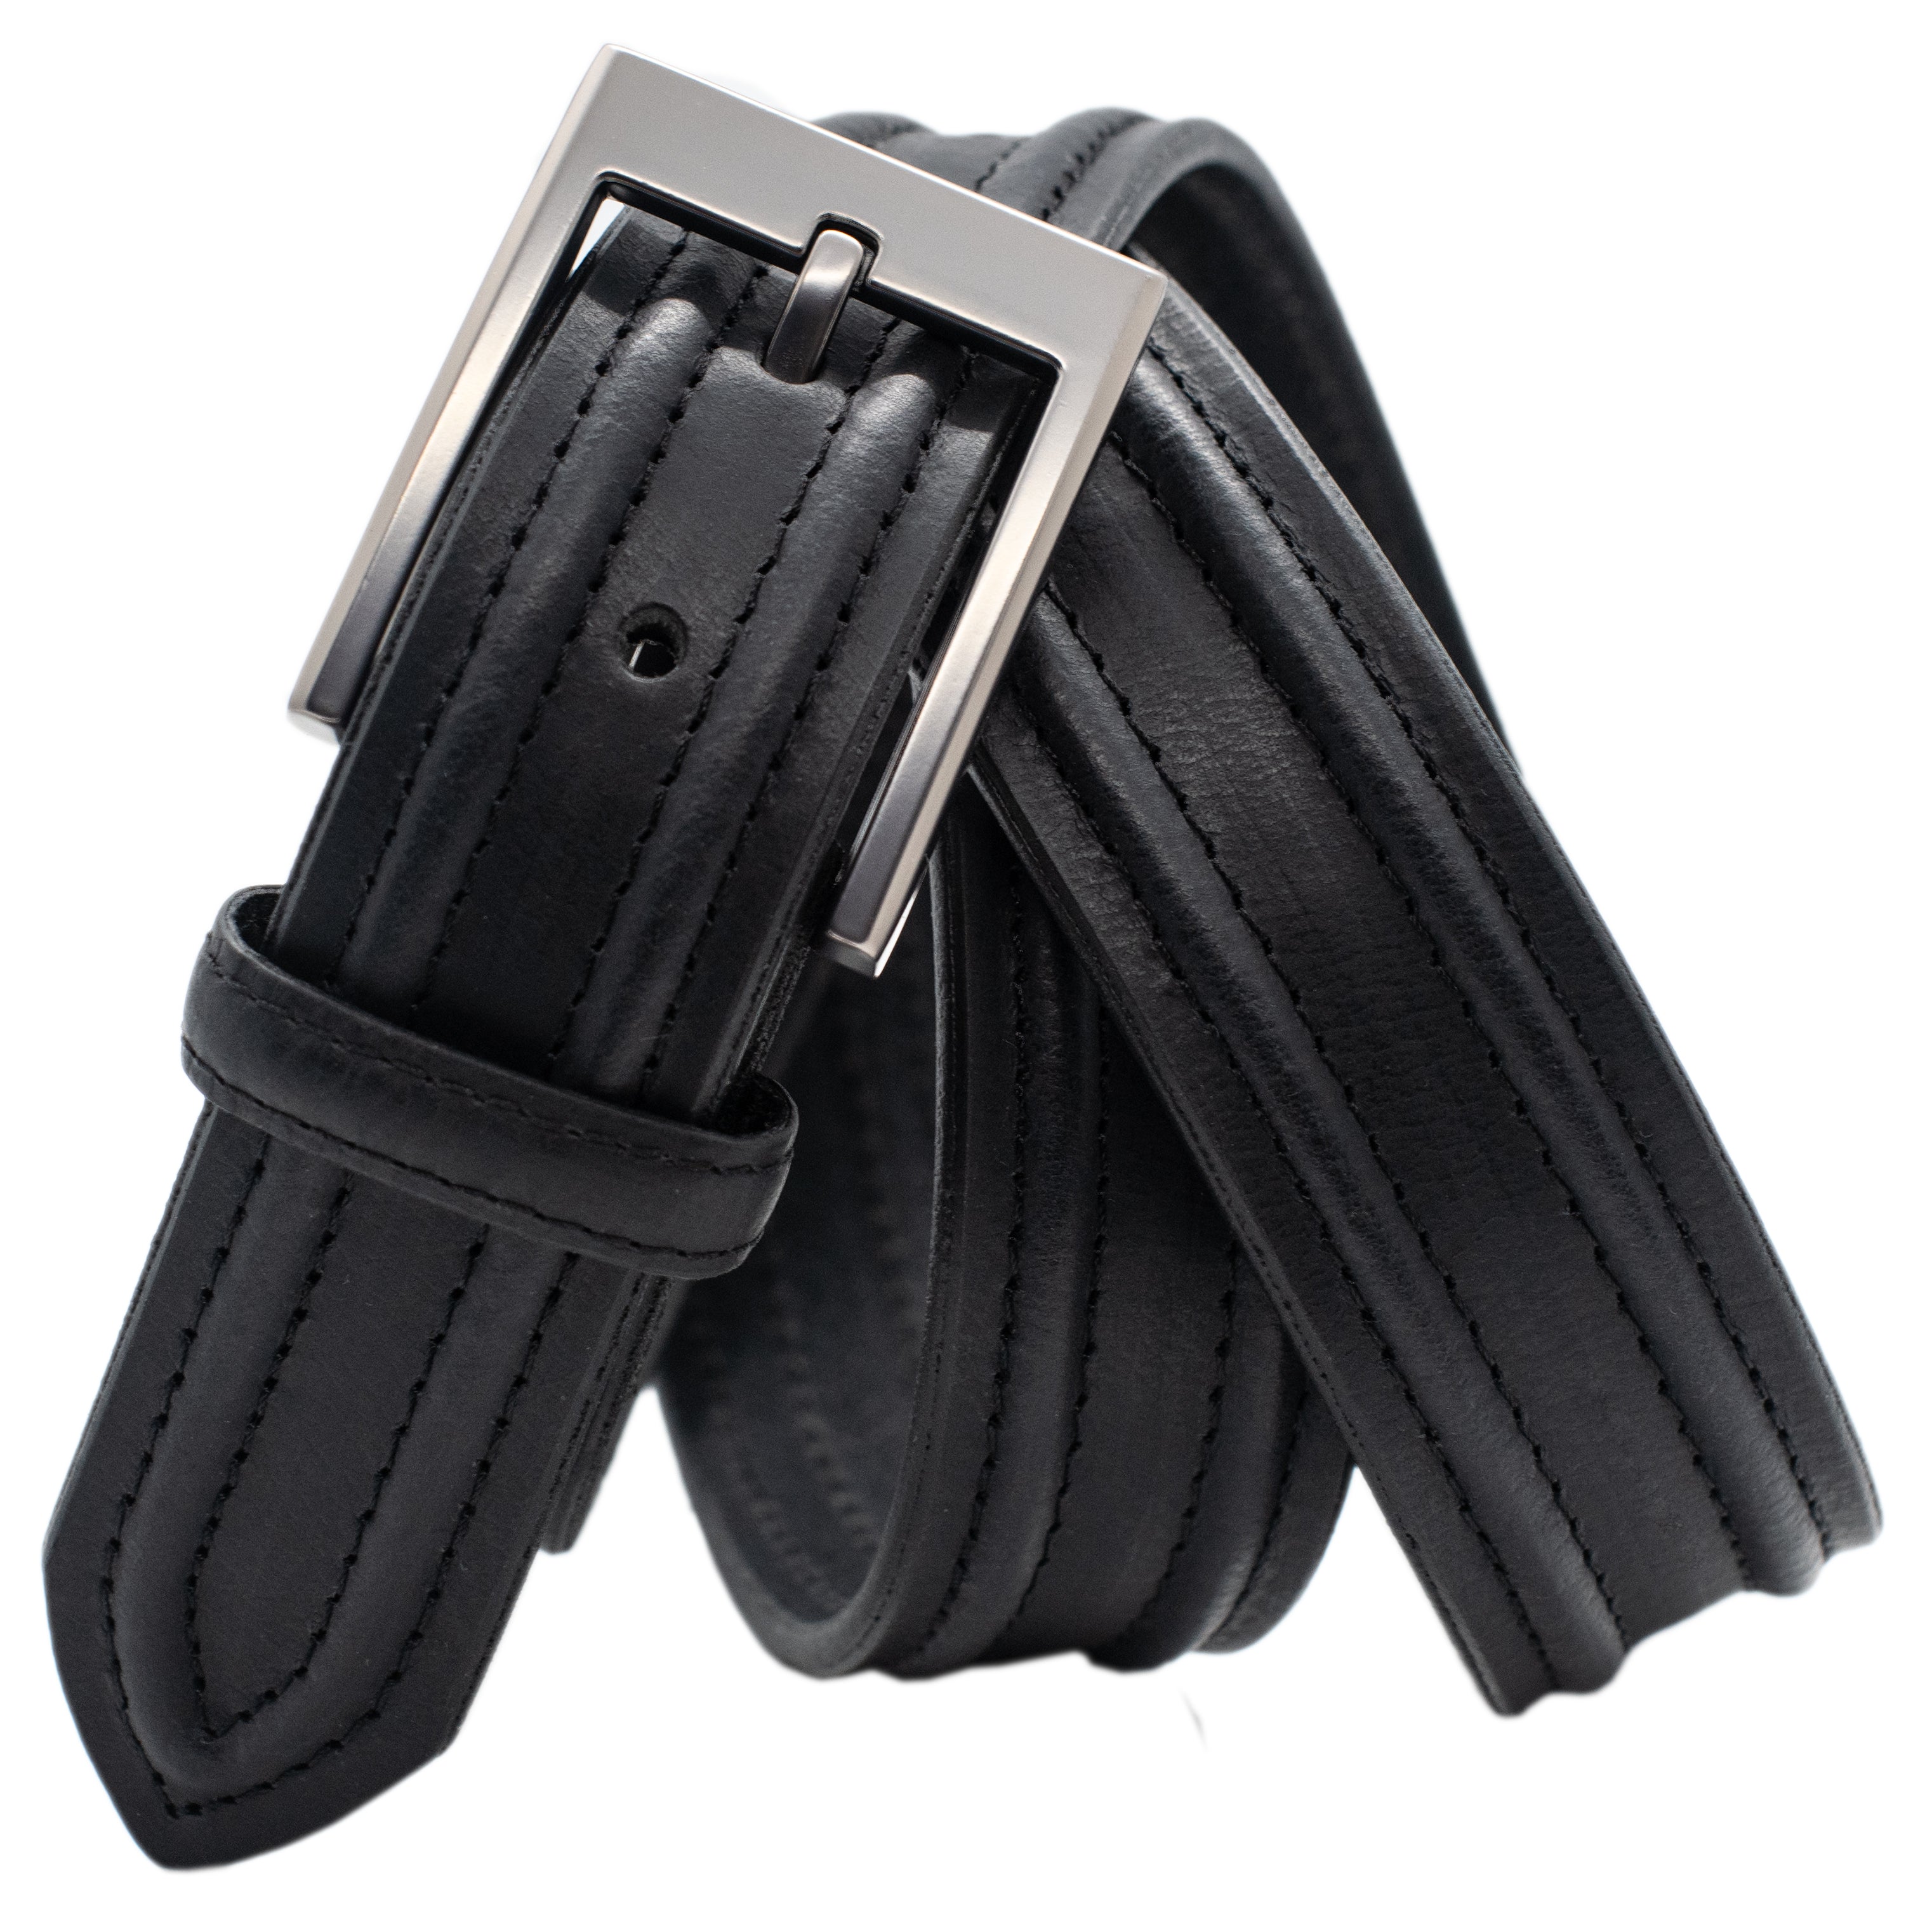 Buffalo Leather Dress Belts with Raised Ridge Accent - Black